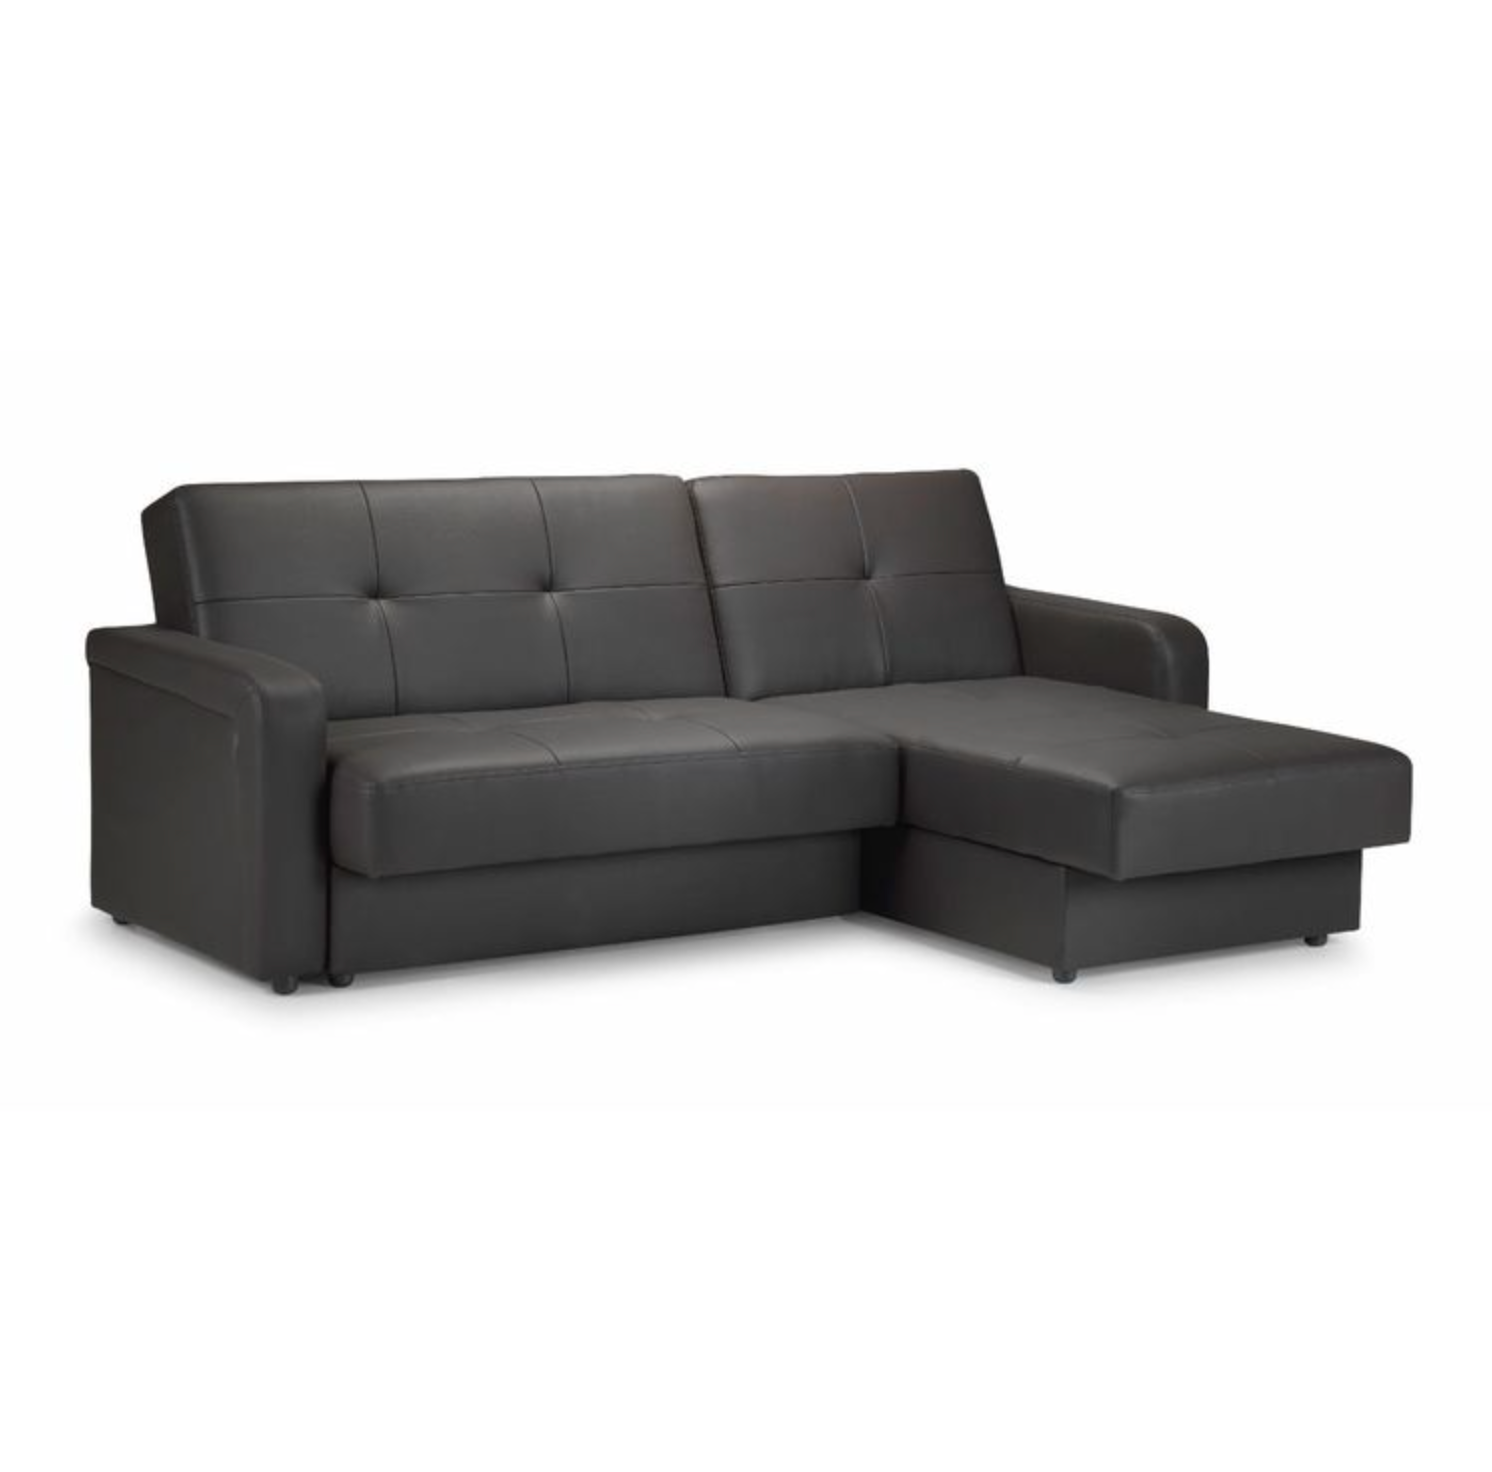 Destiny Corner Sofa Bed with Storage Brown Leather